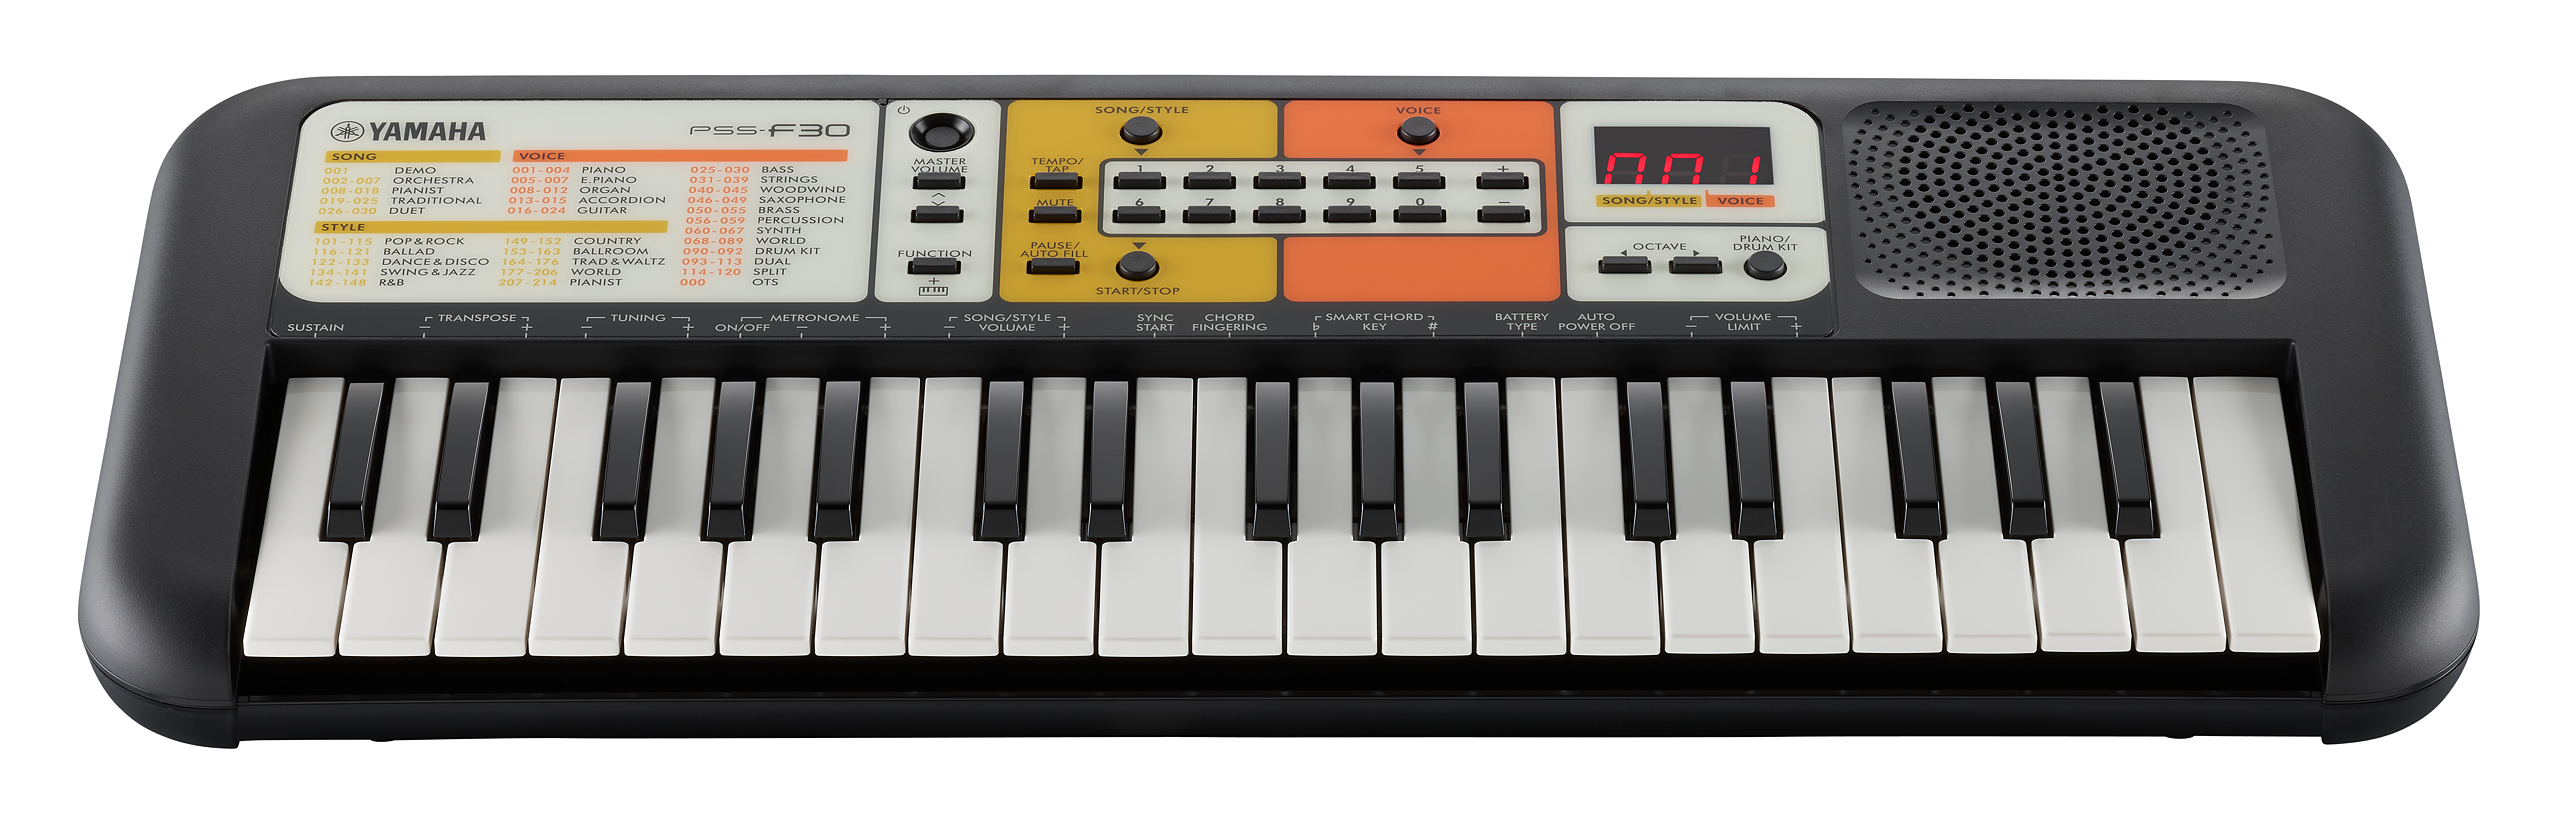 Yamaha Pss-f30 - Entertainer Keyboard - Variation 1